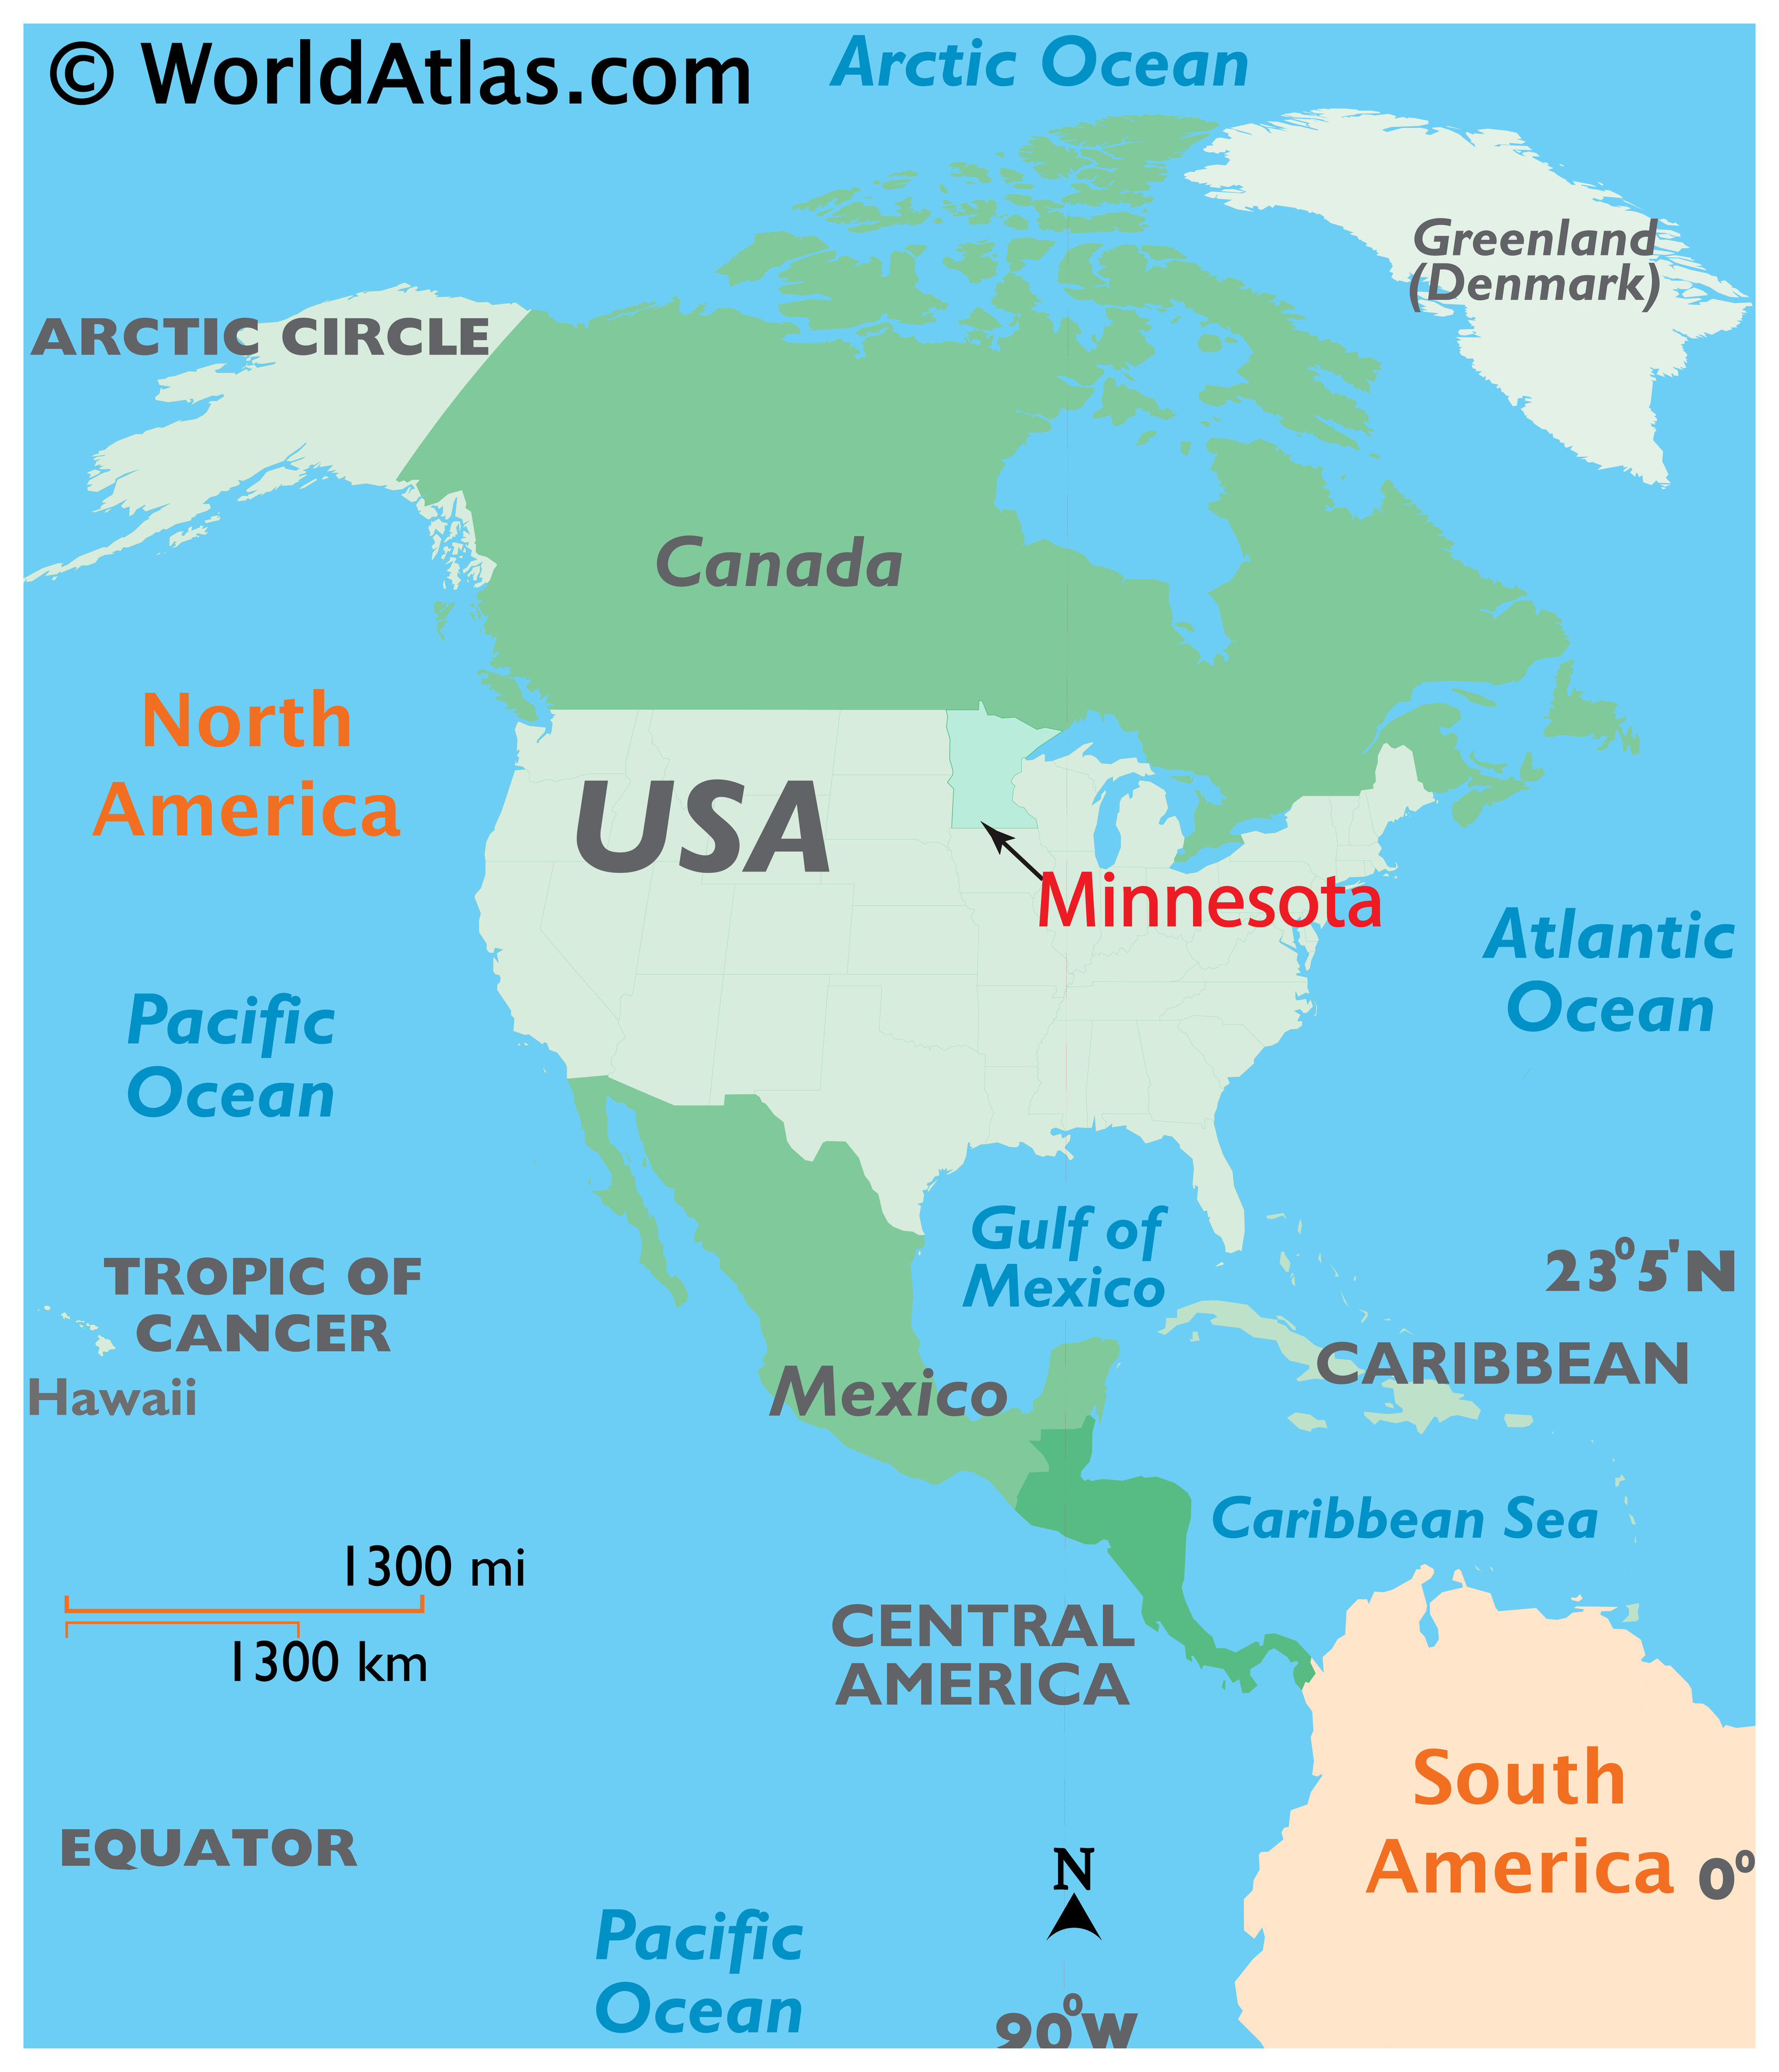 Saint Paul map, capital city of the USA state of Minnesota